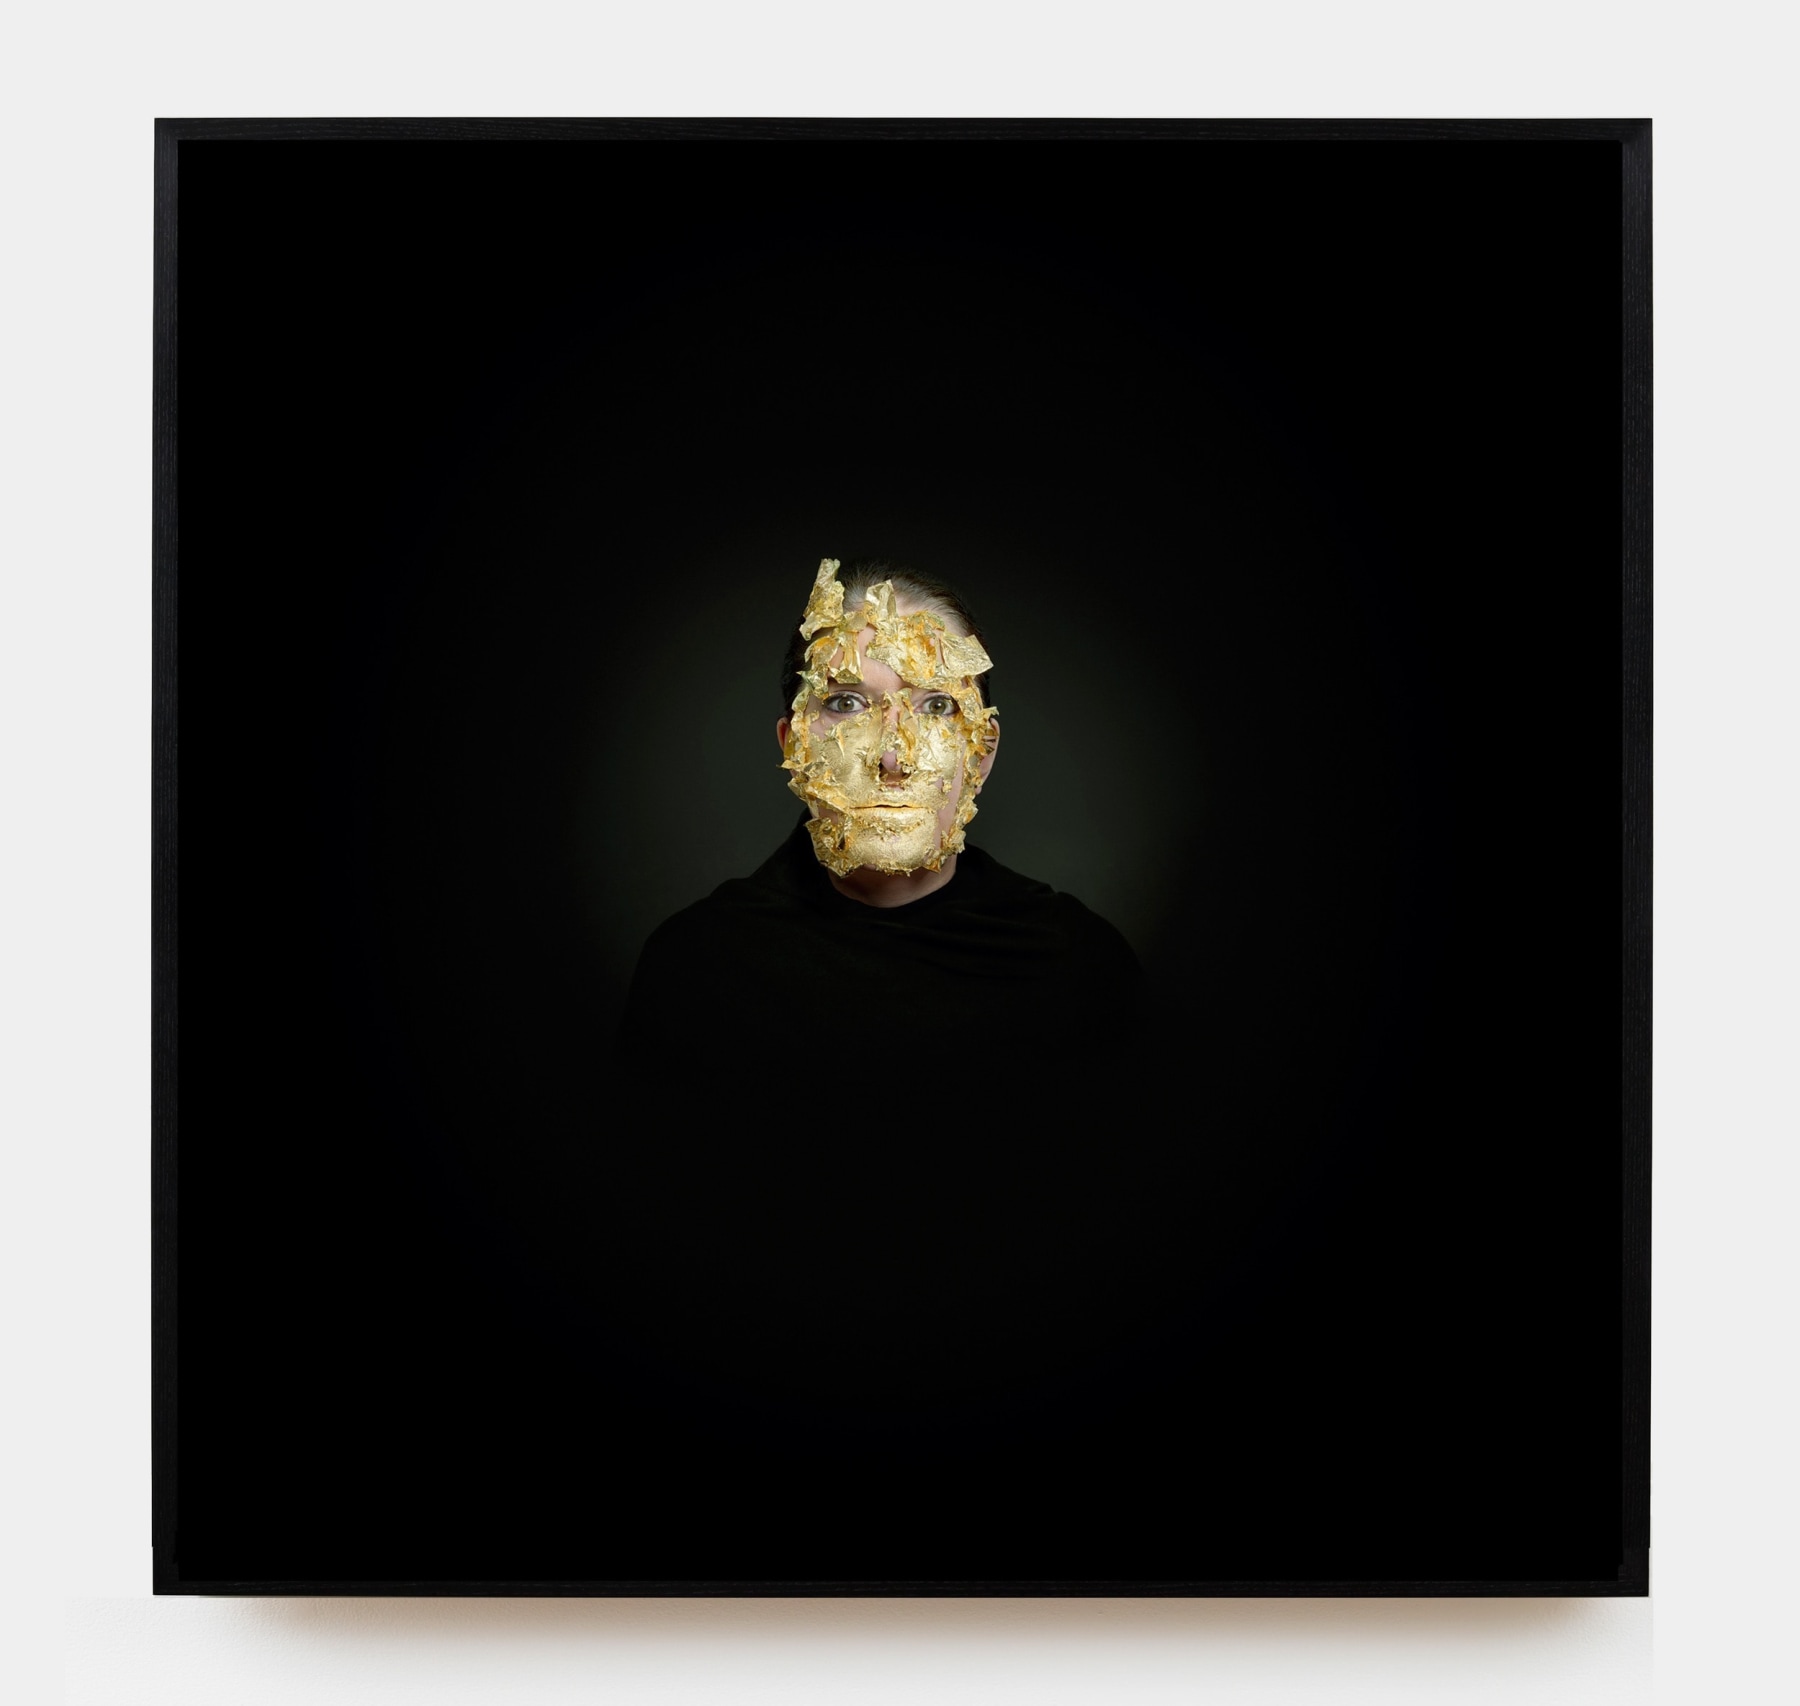 MARINA ABRAMOVIC, Portrait with Golden Mask, 2009